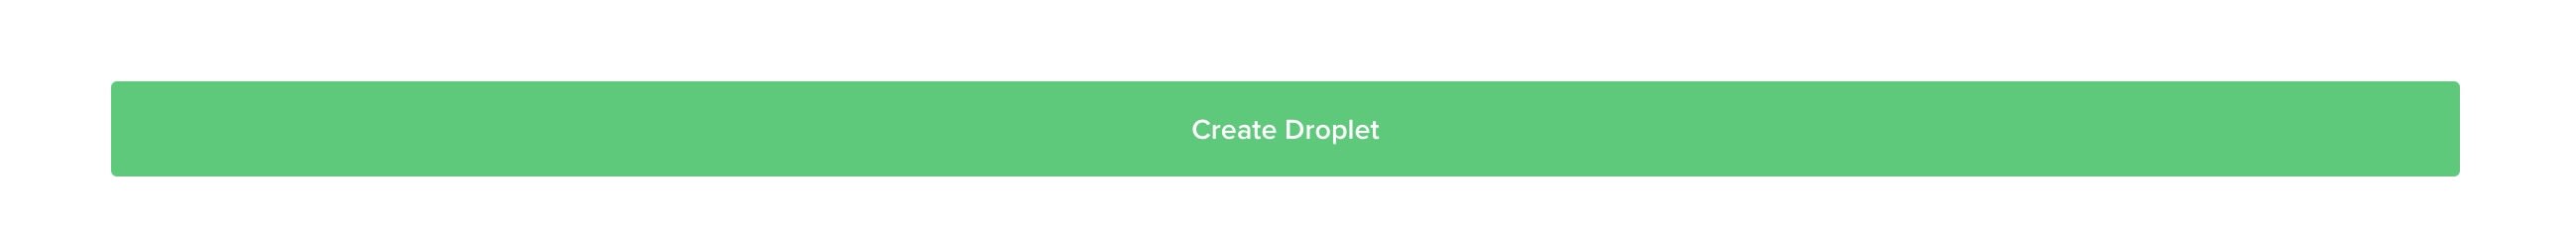 create ubuntu droplet